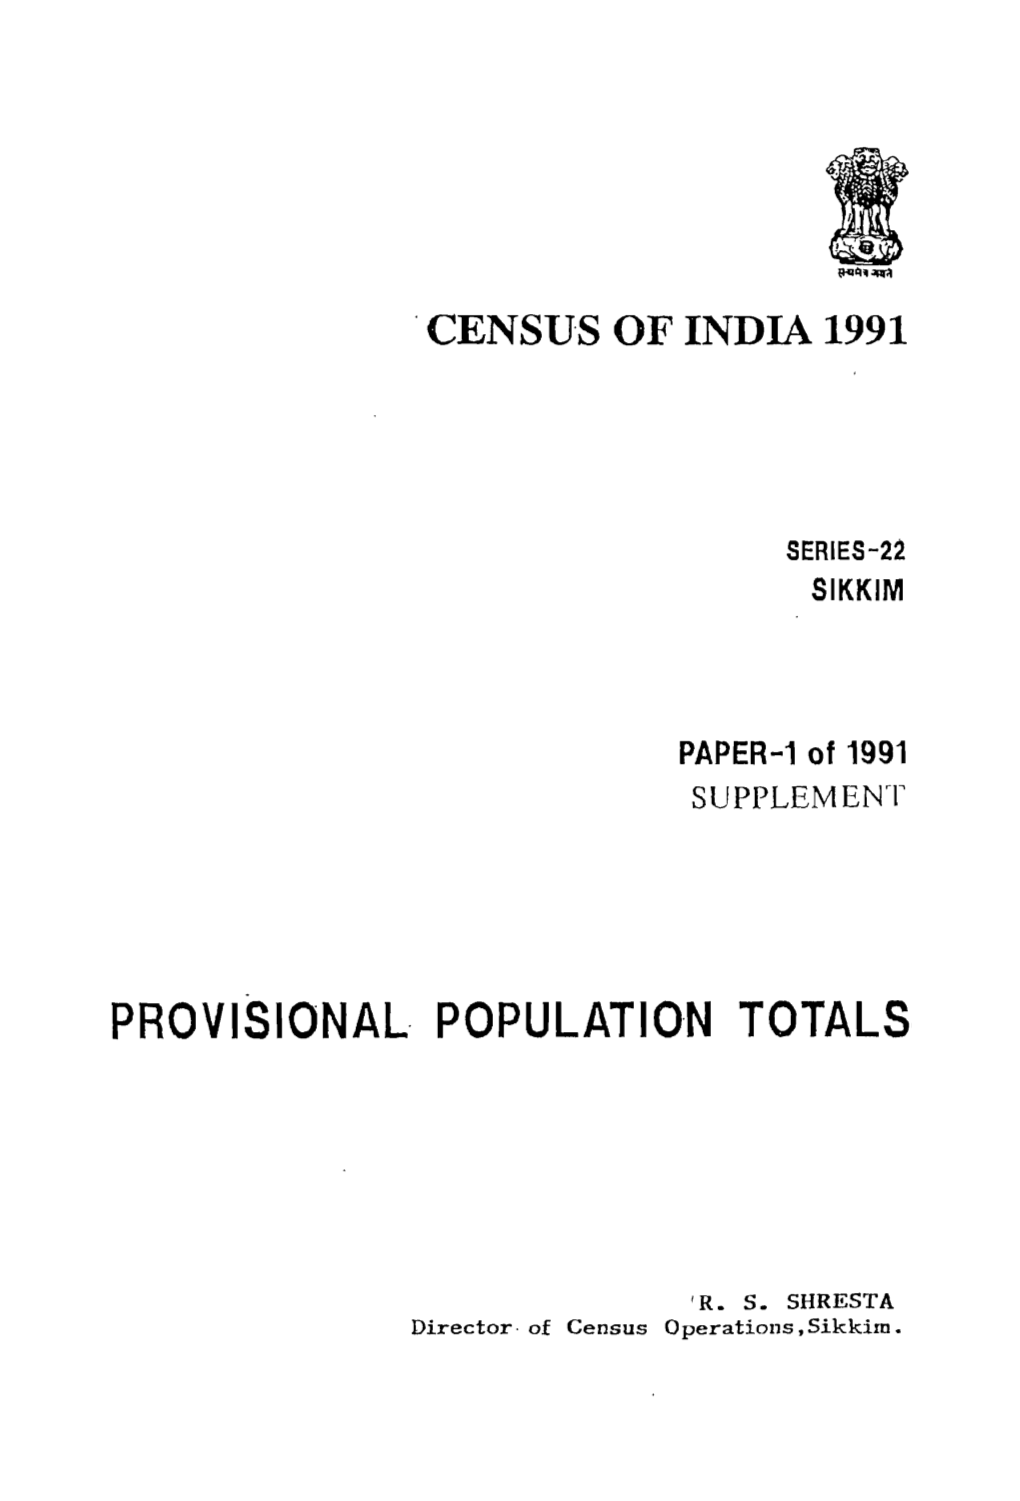 Provisional Population Totals, Series-22, Sikkim